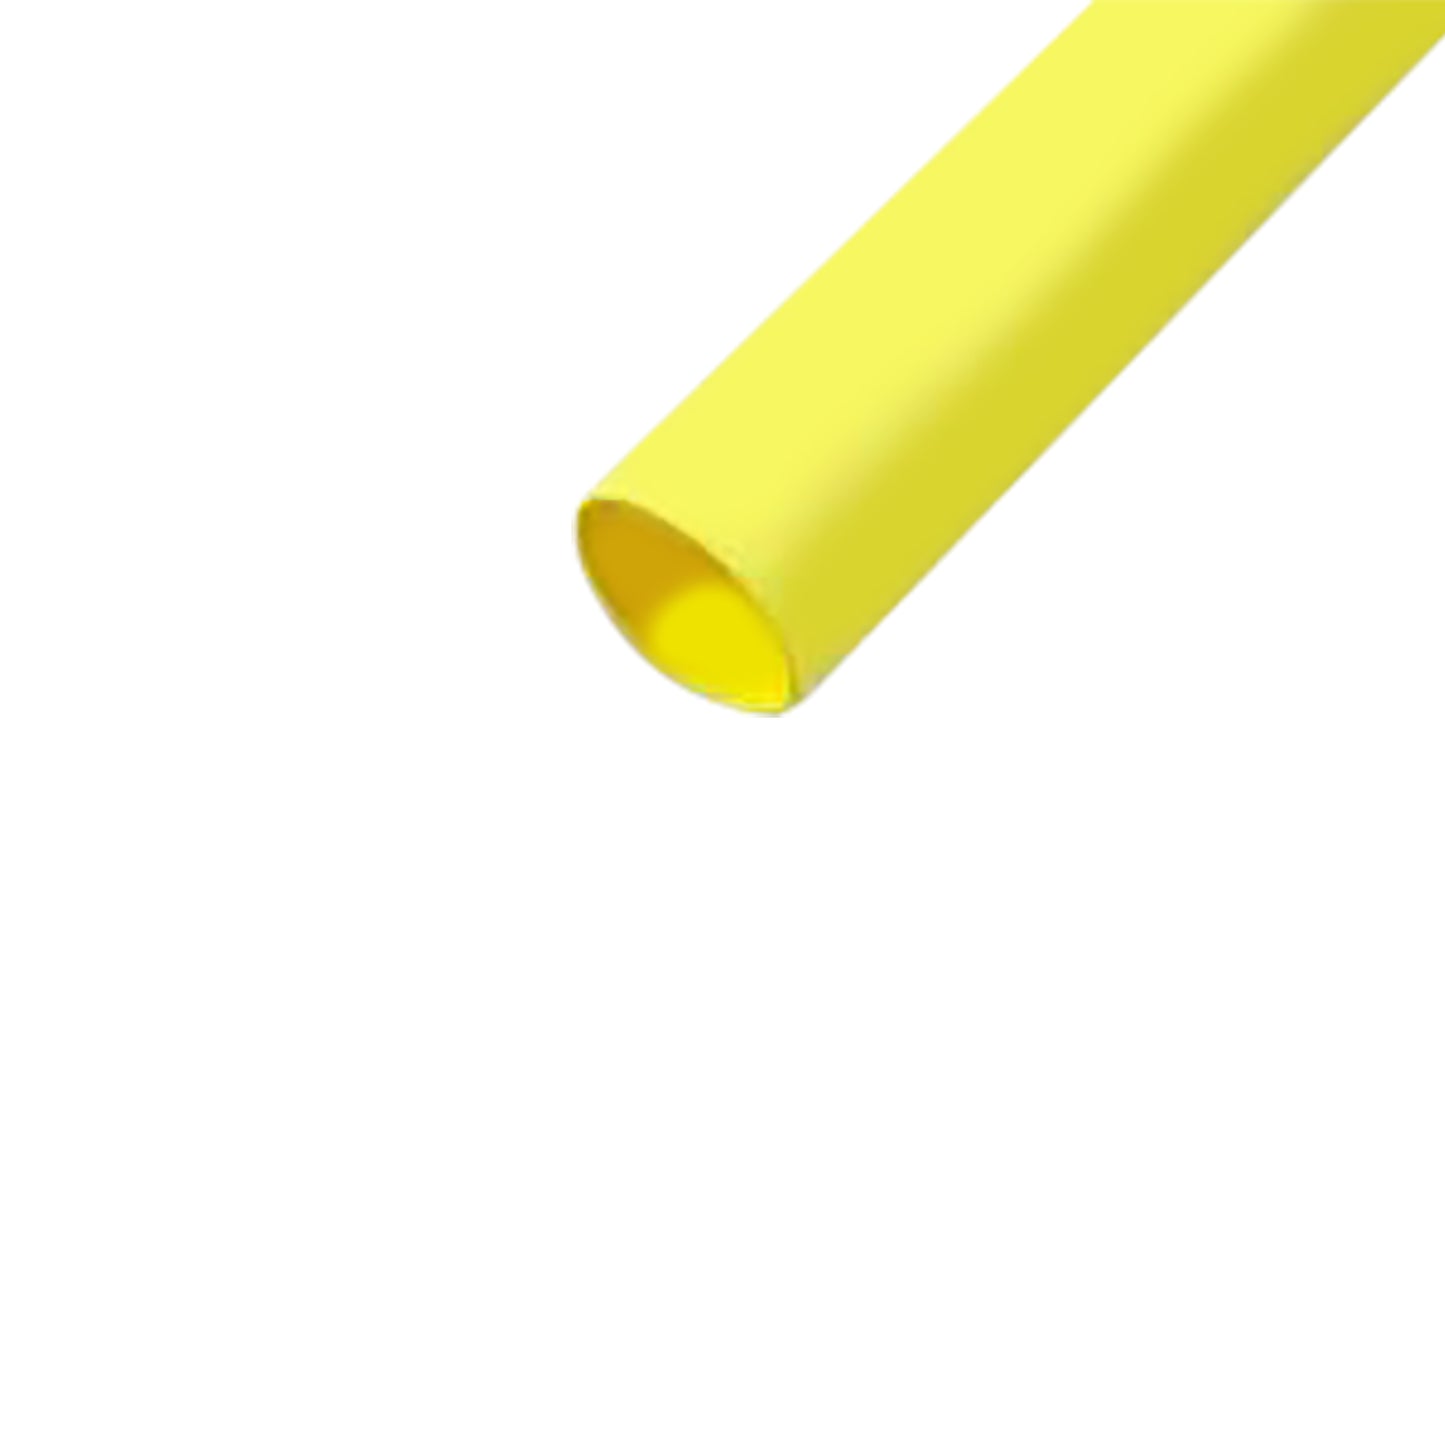 Flexible Thin Single Wall Non-Adhesive Heat Shrink Tubing 2:1 Yellow 1/4" ID - 100' Ft Spool